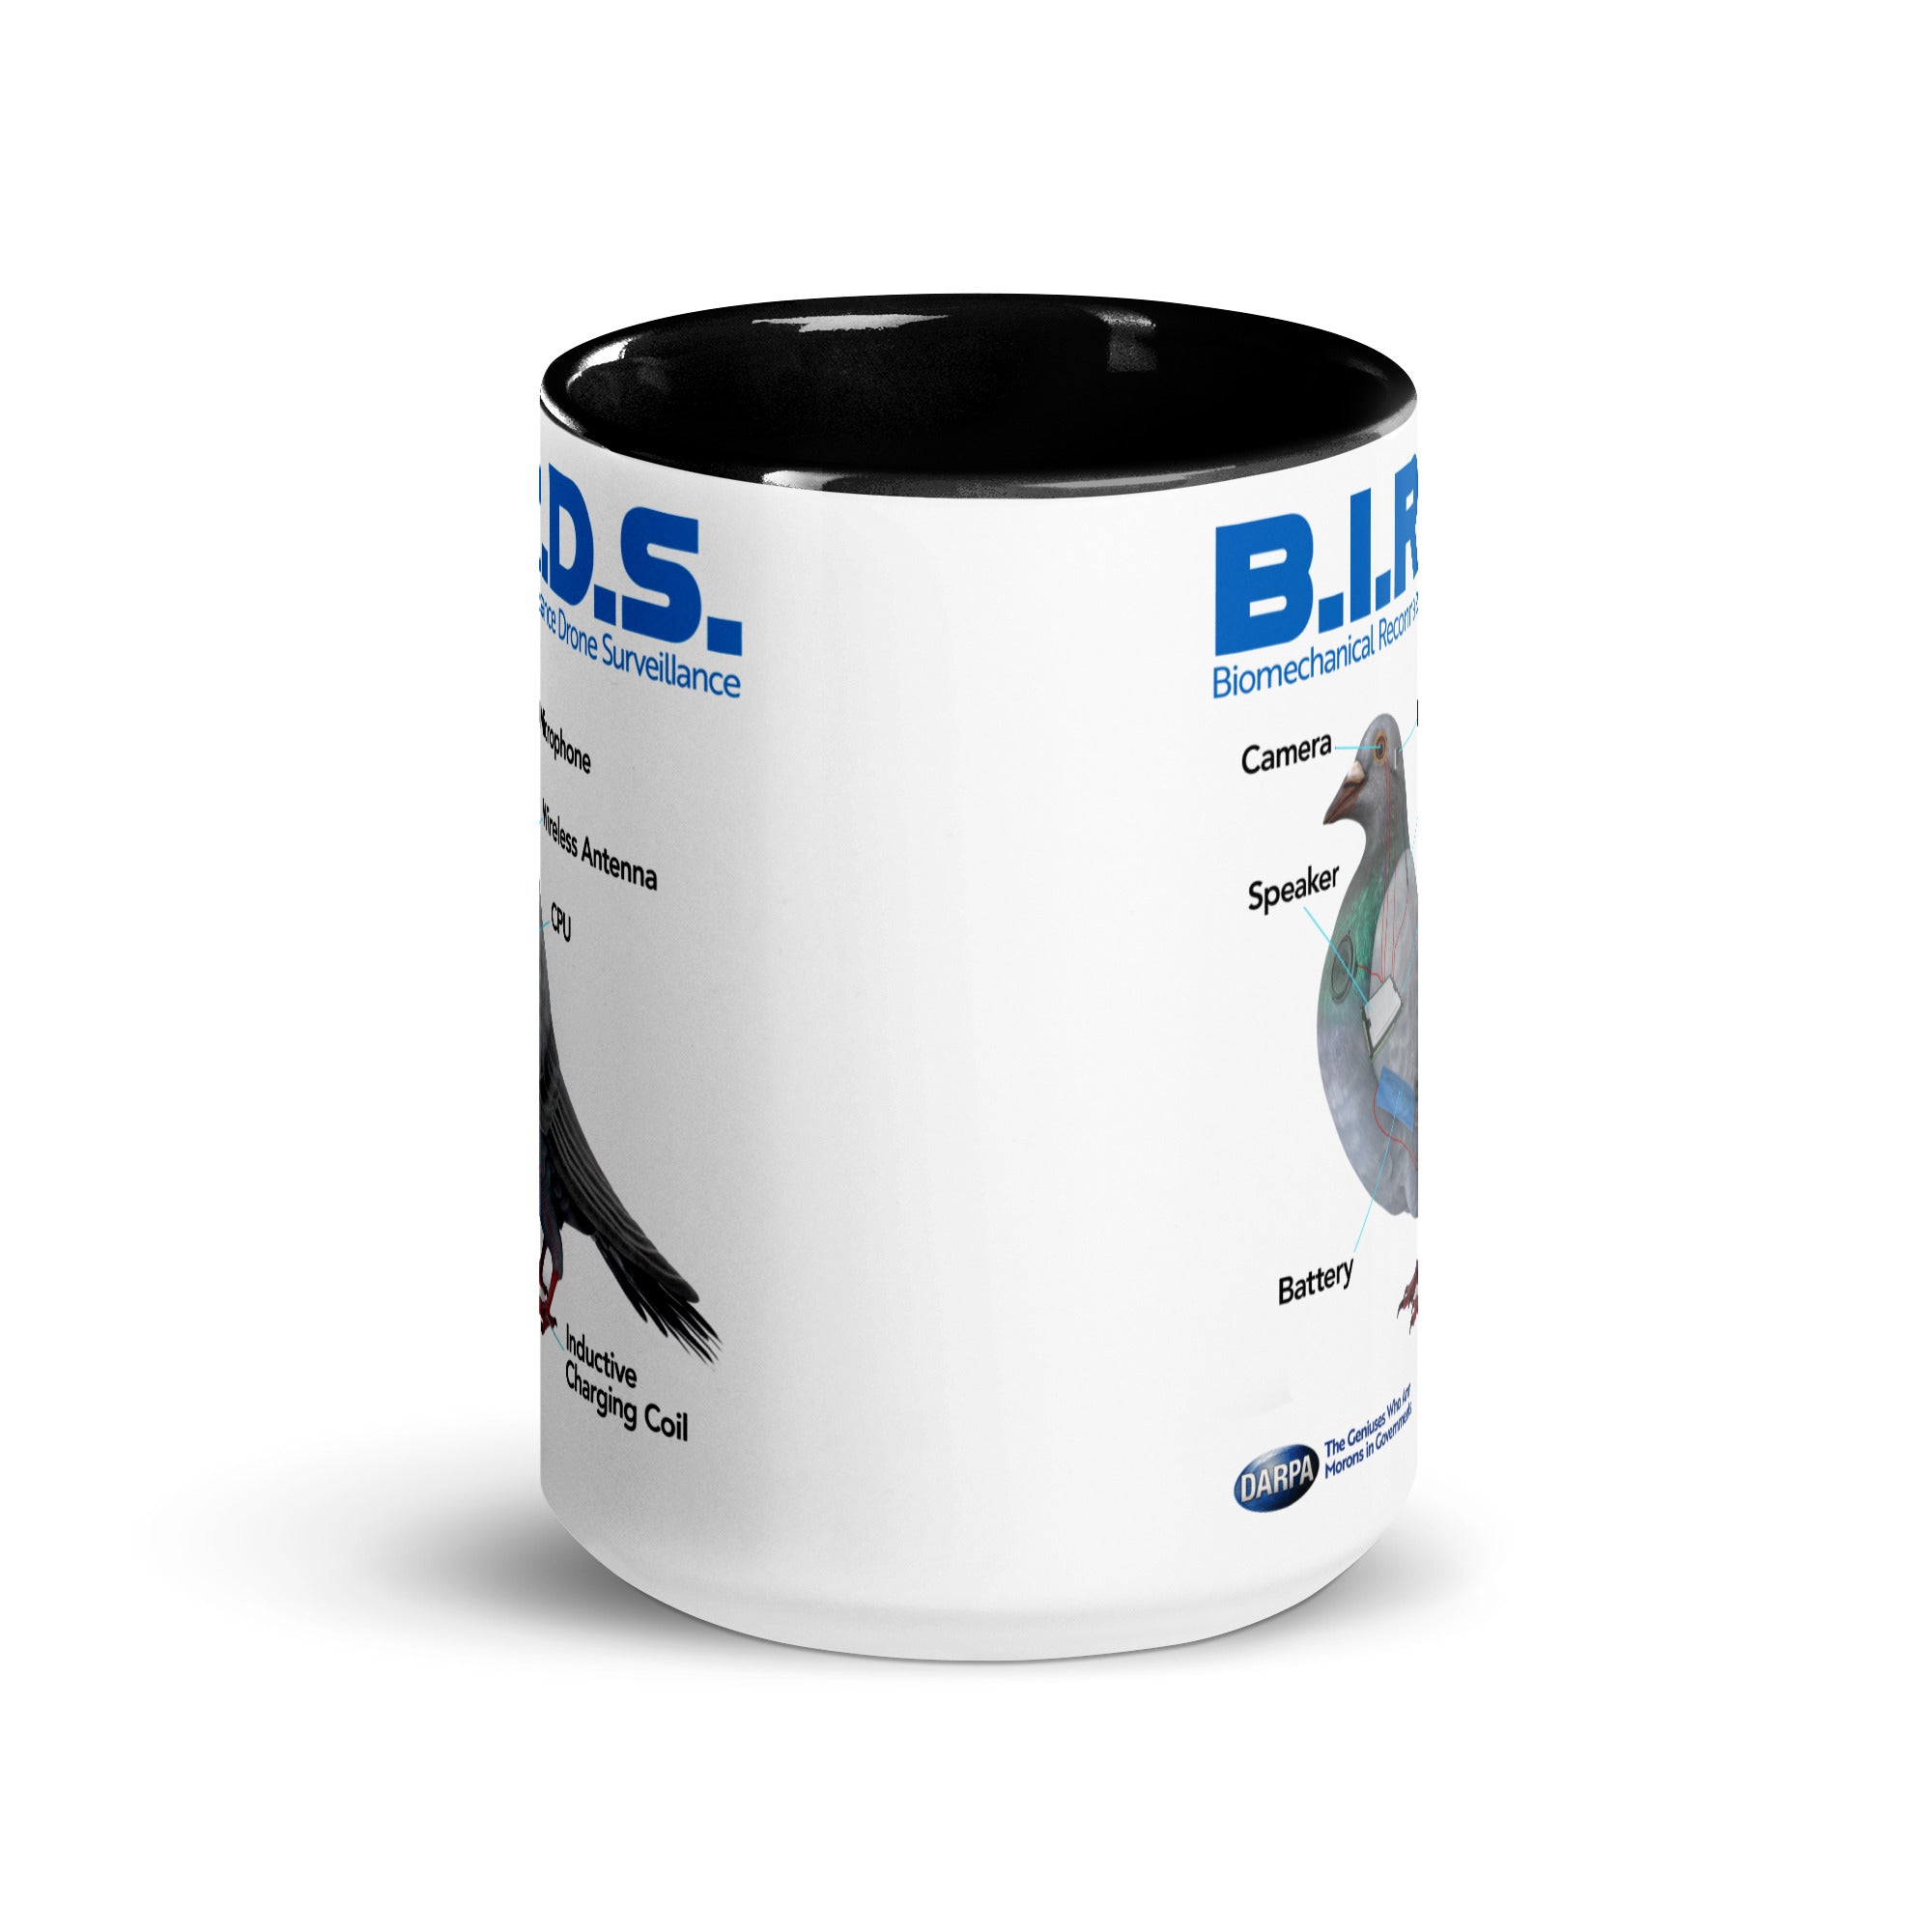 B.I.R.D.S. Biomechanical Reconnaissance Drone Surveillance Coffee Mug